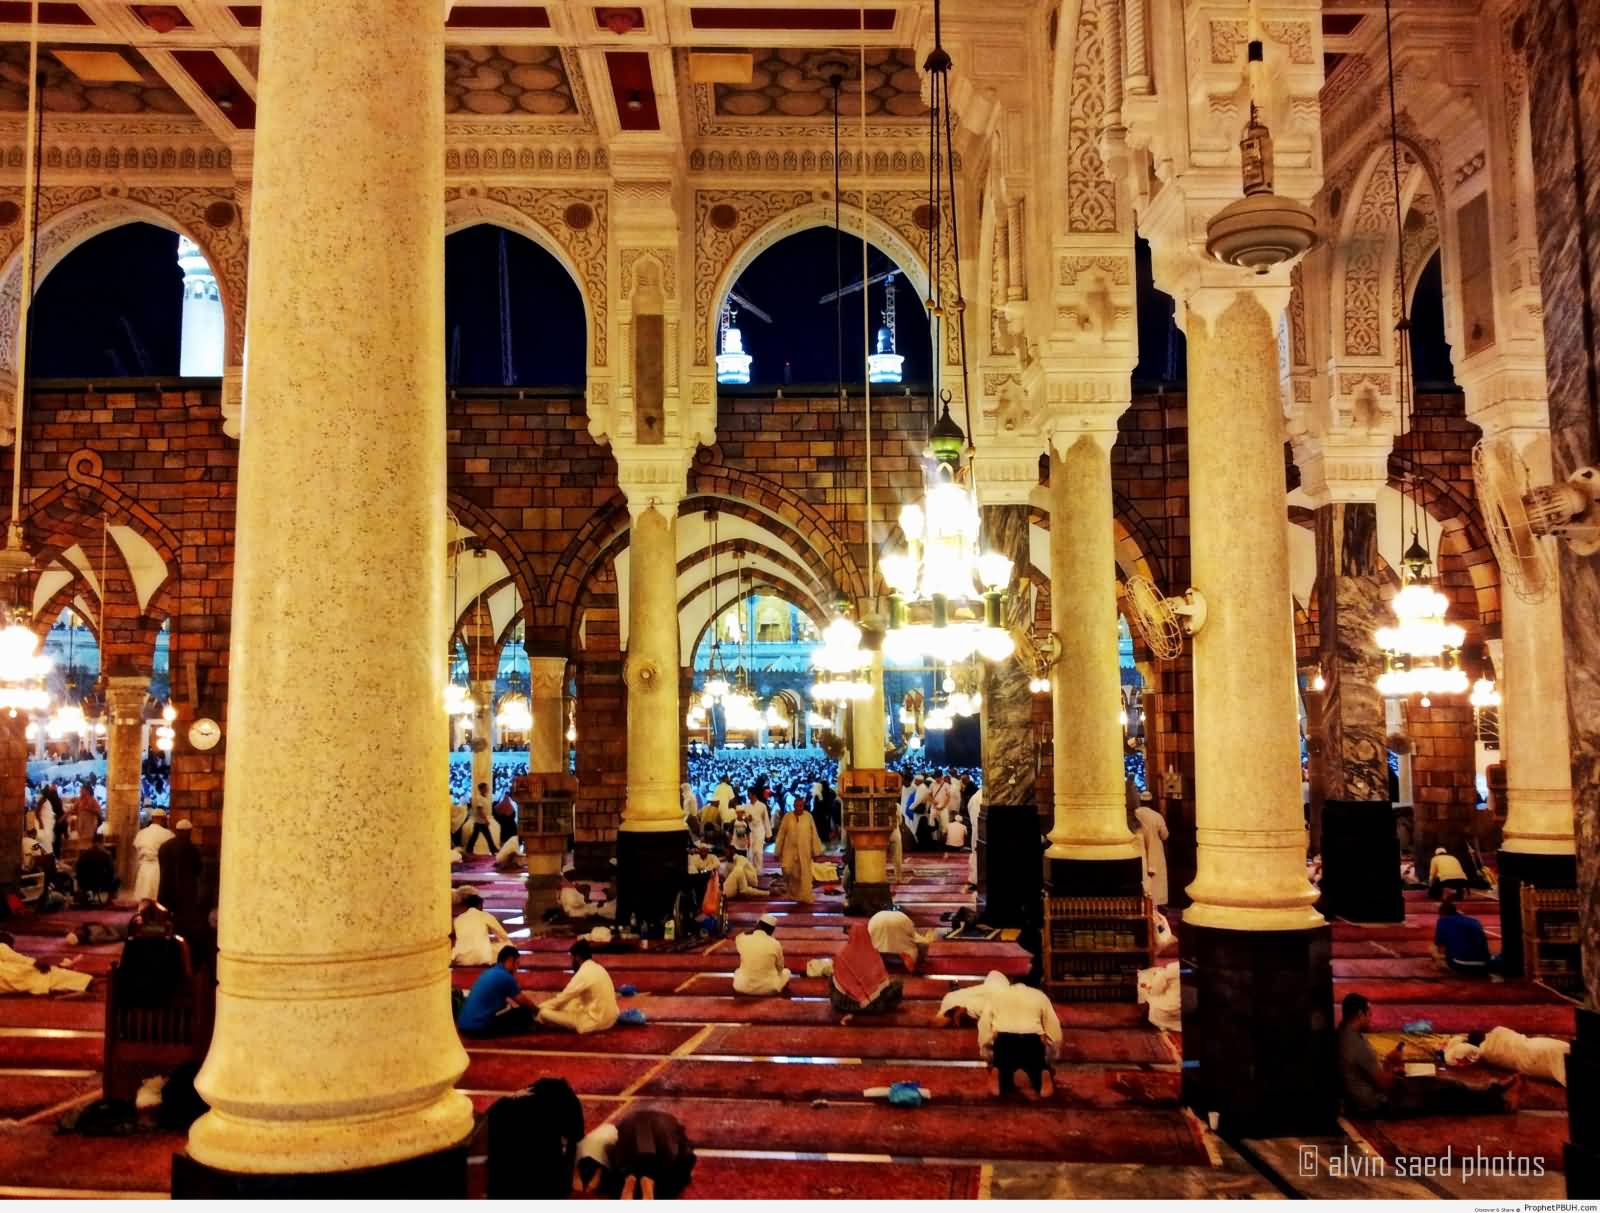 Inside View Of Al-Masjid al-Haram In Mecca, Saudi Arabia